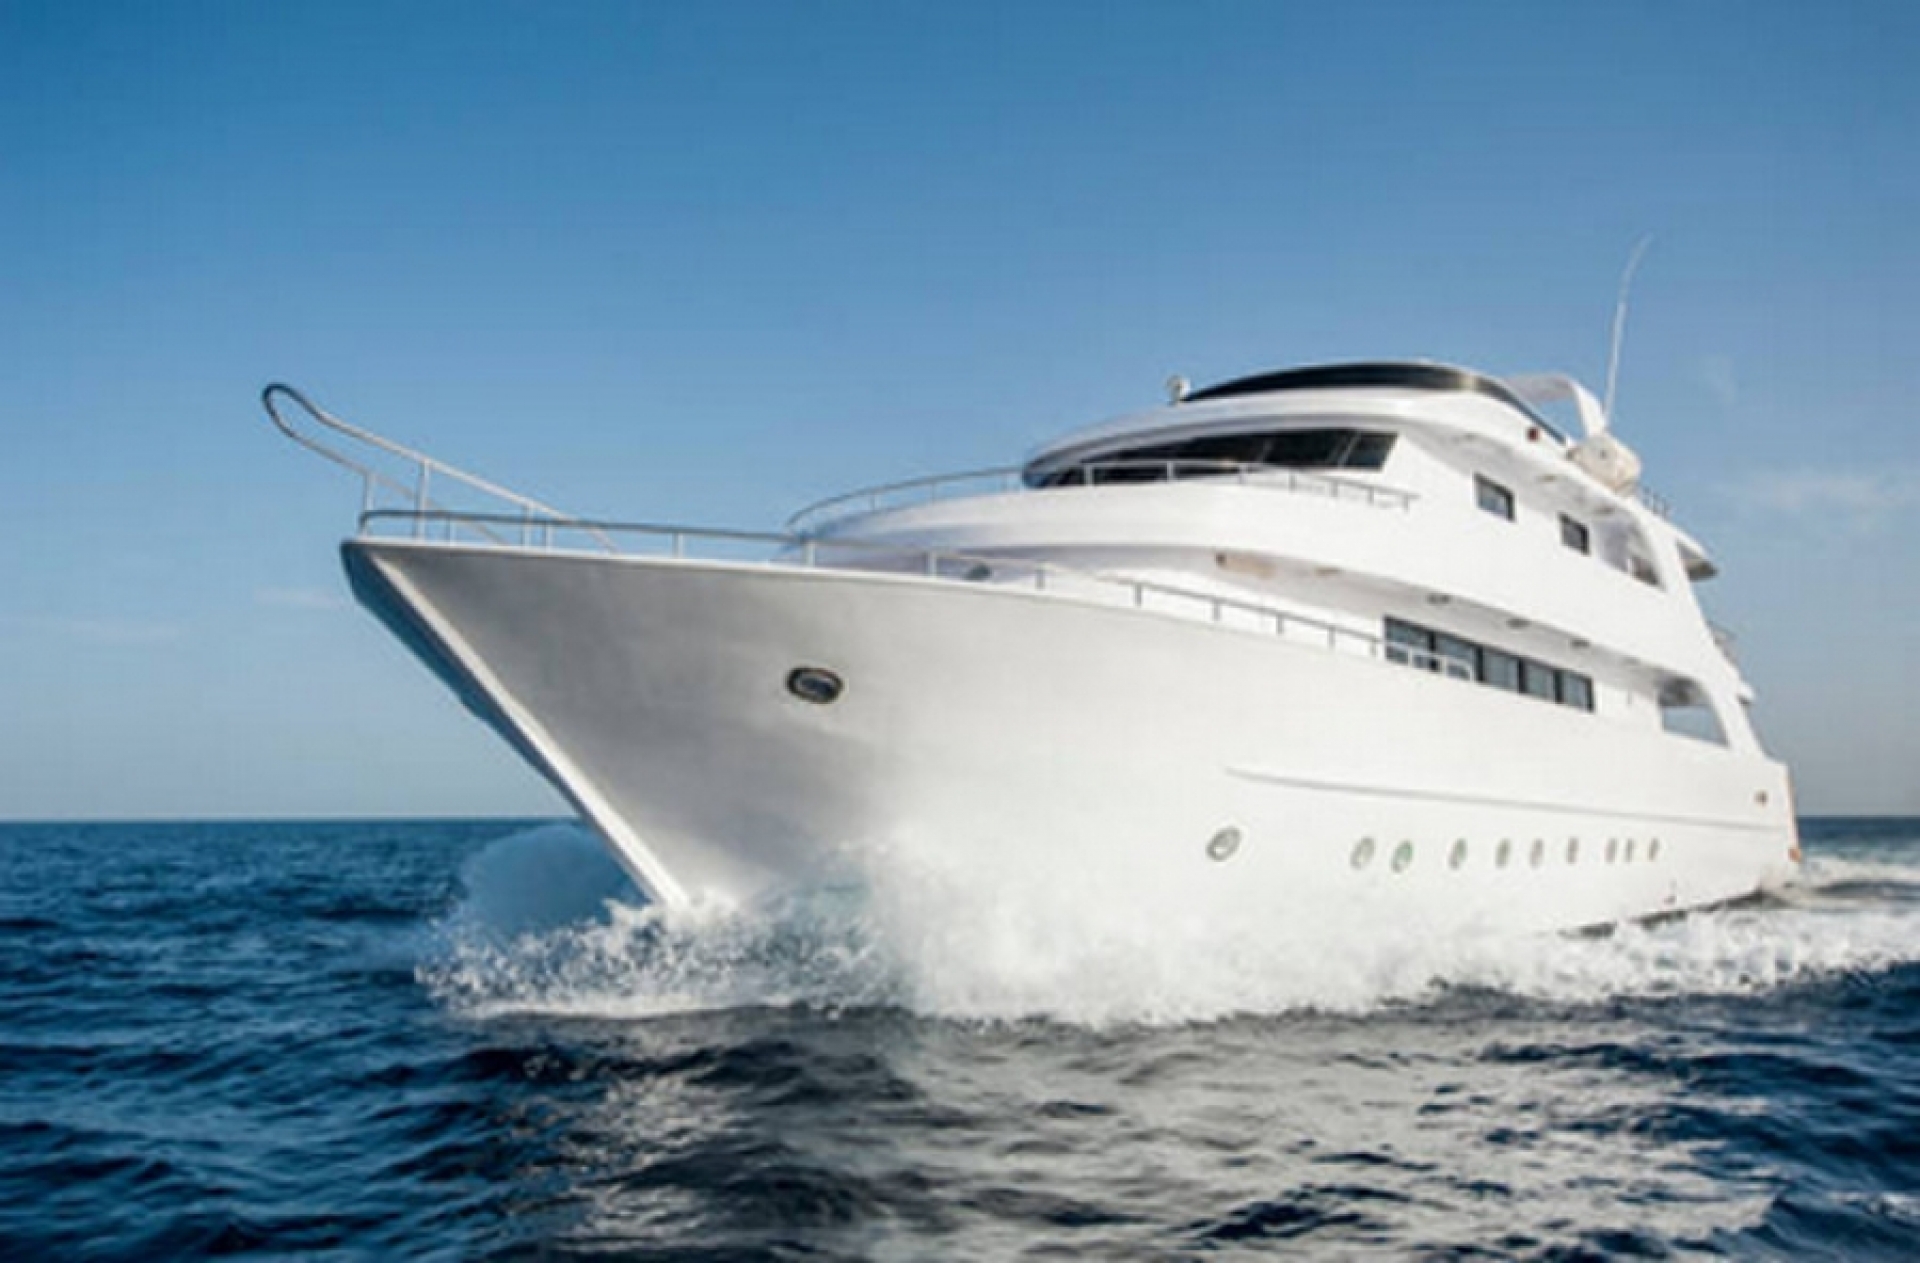 starwind class pleasure yacht